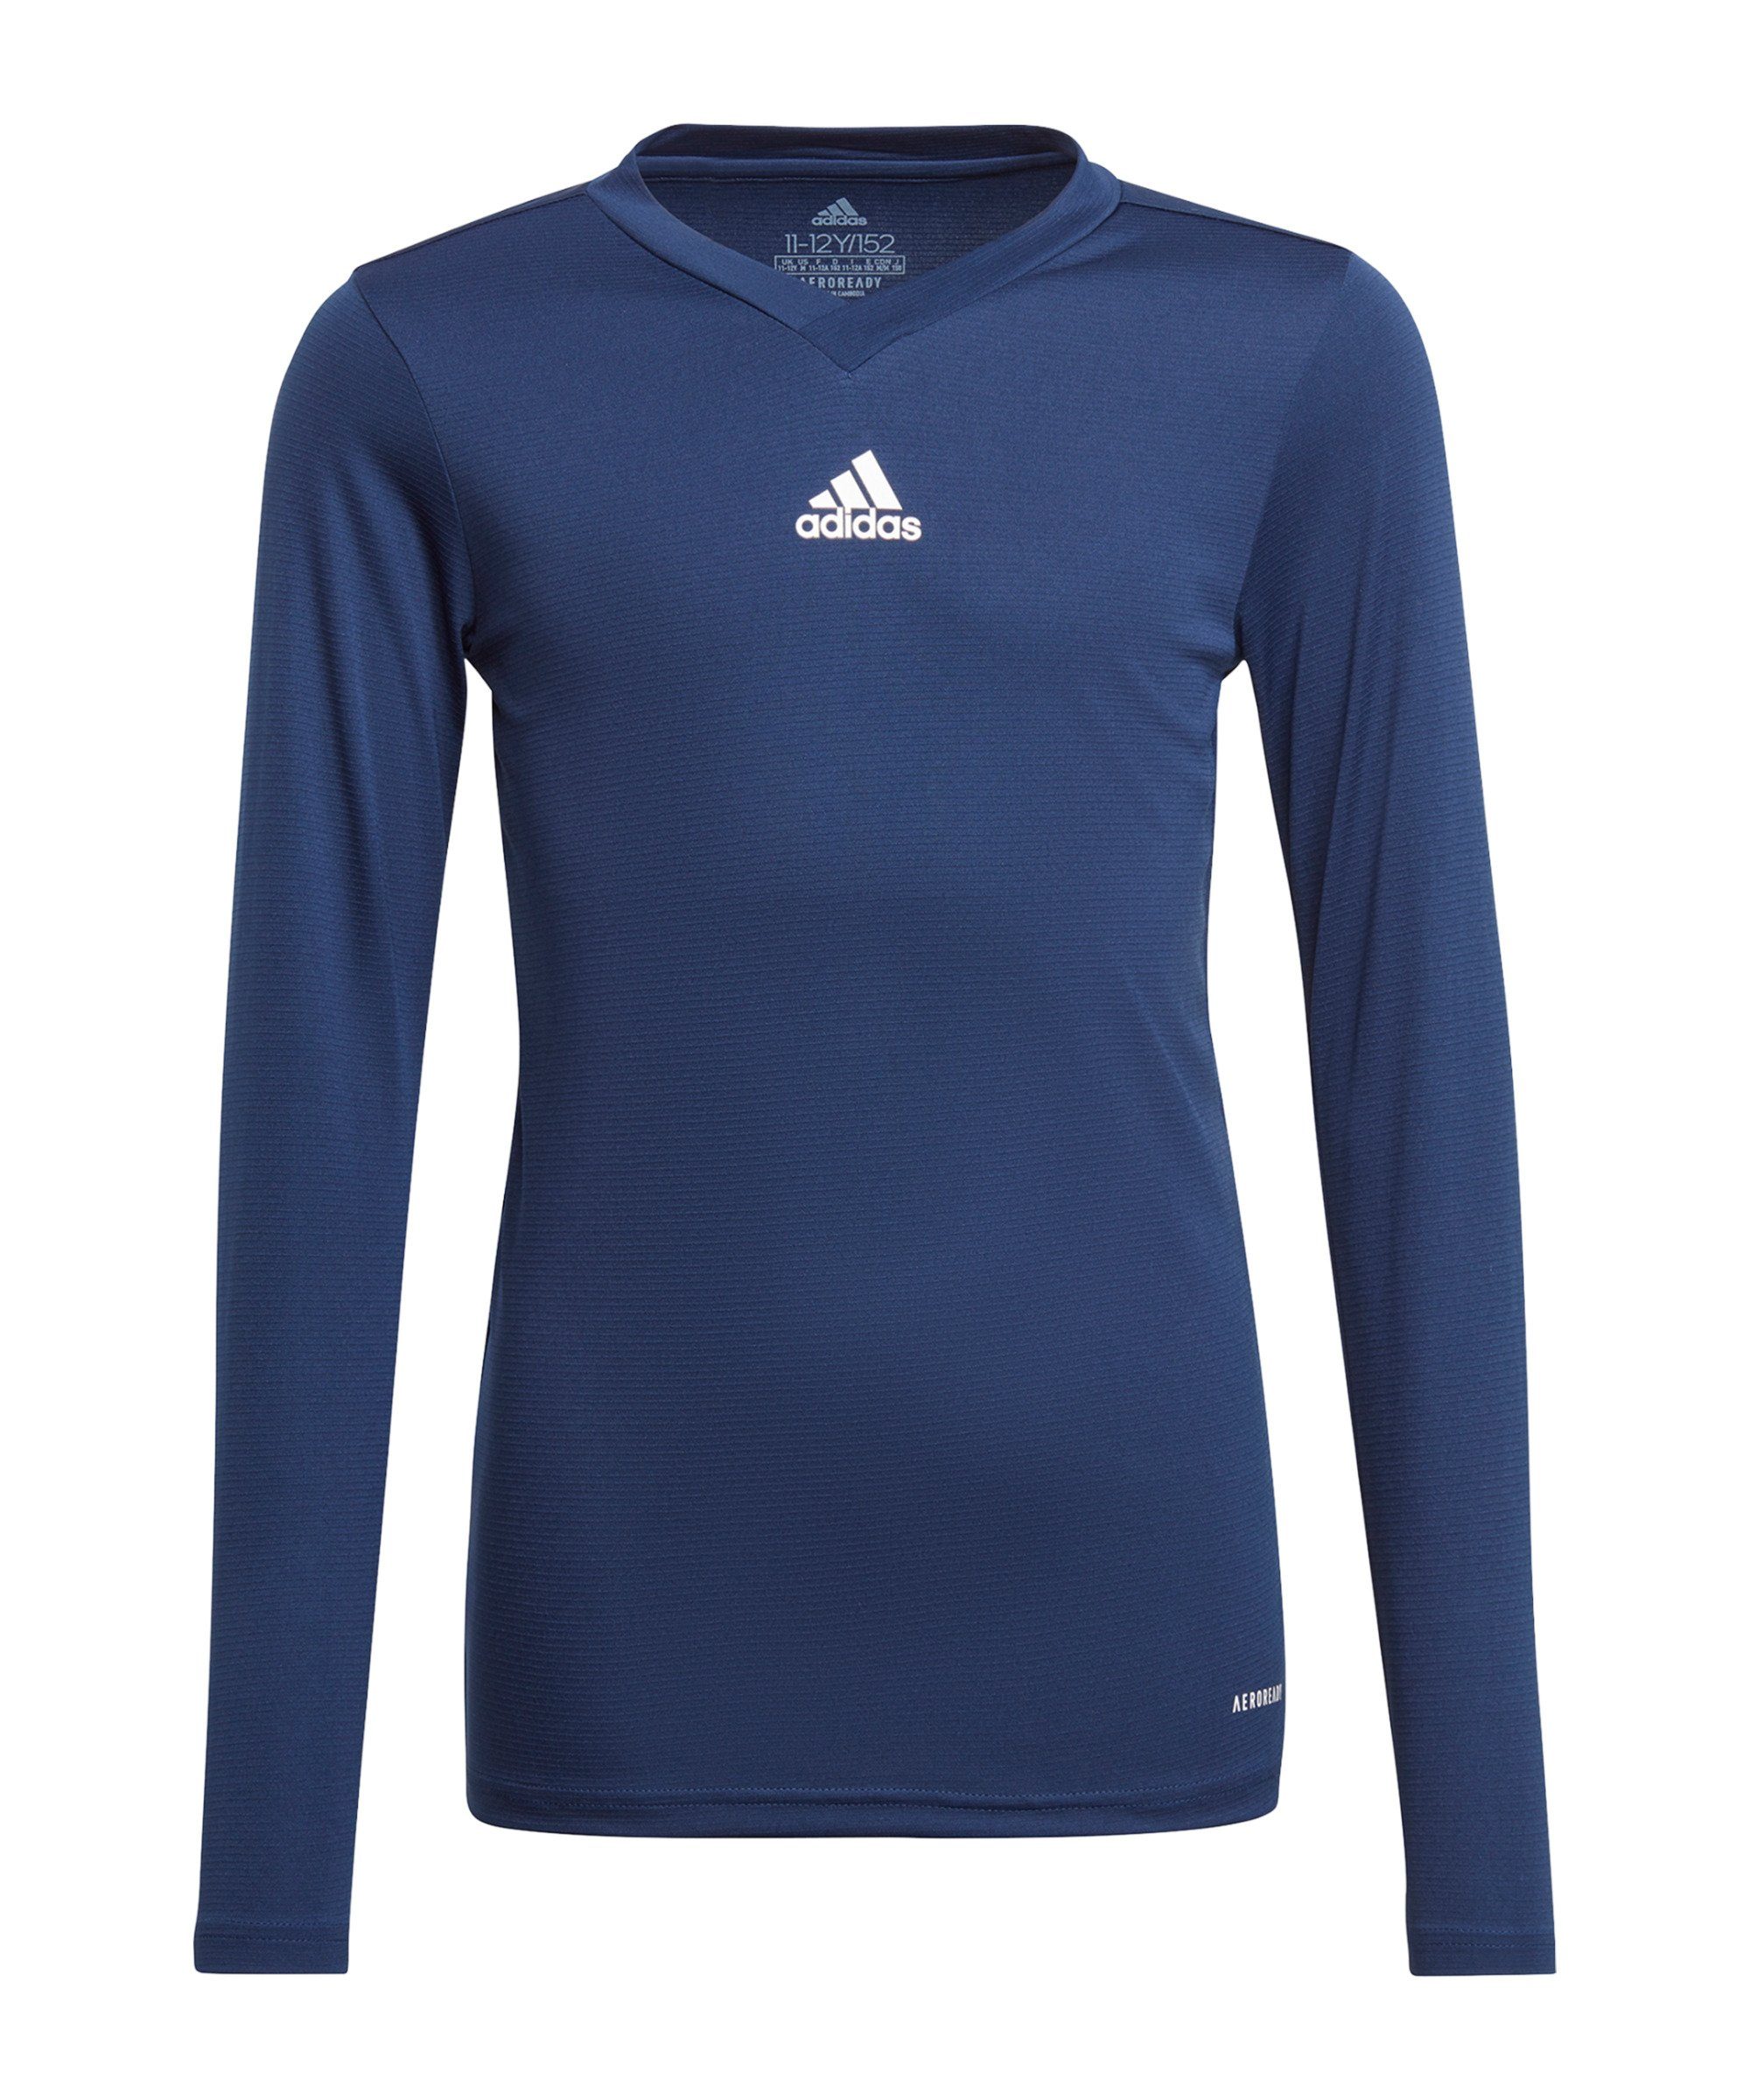 adidas Performance Funktionsshirt Team Base Top langarm Kids Dunkel default blaublau | Funktionsshirts